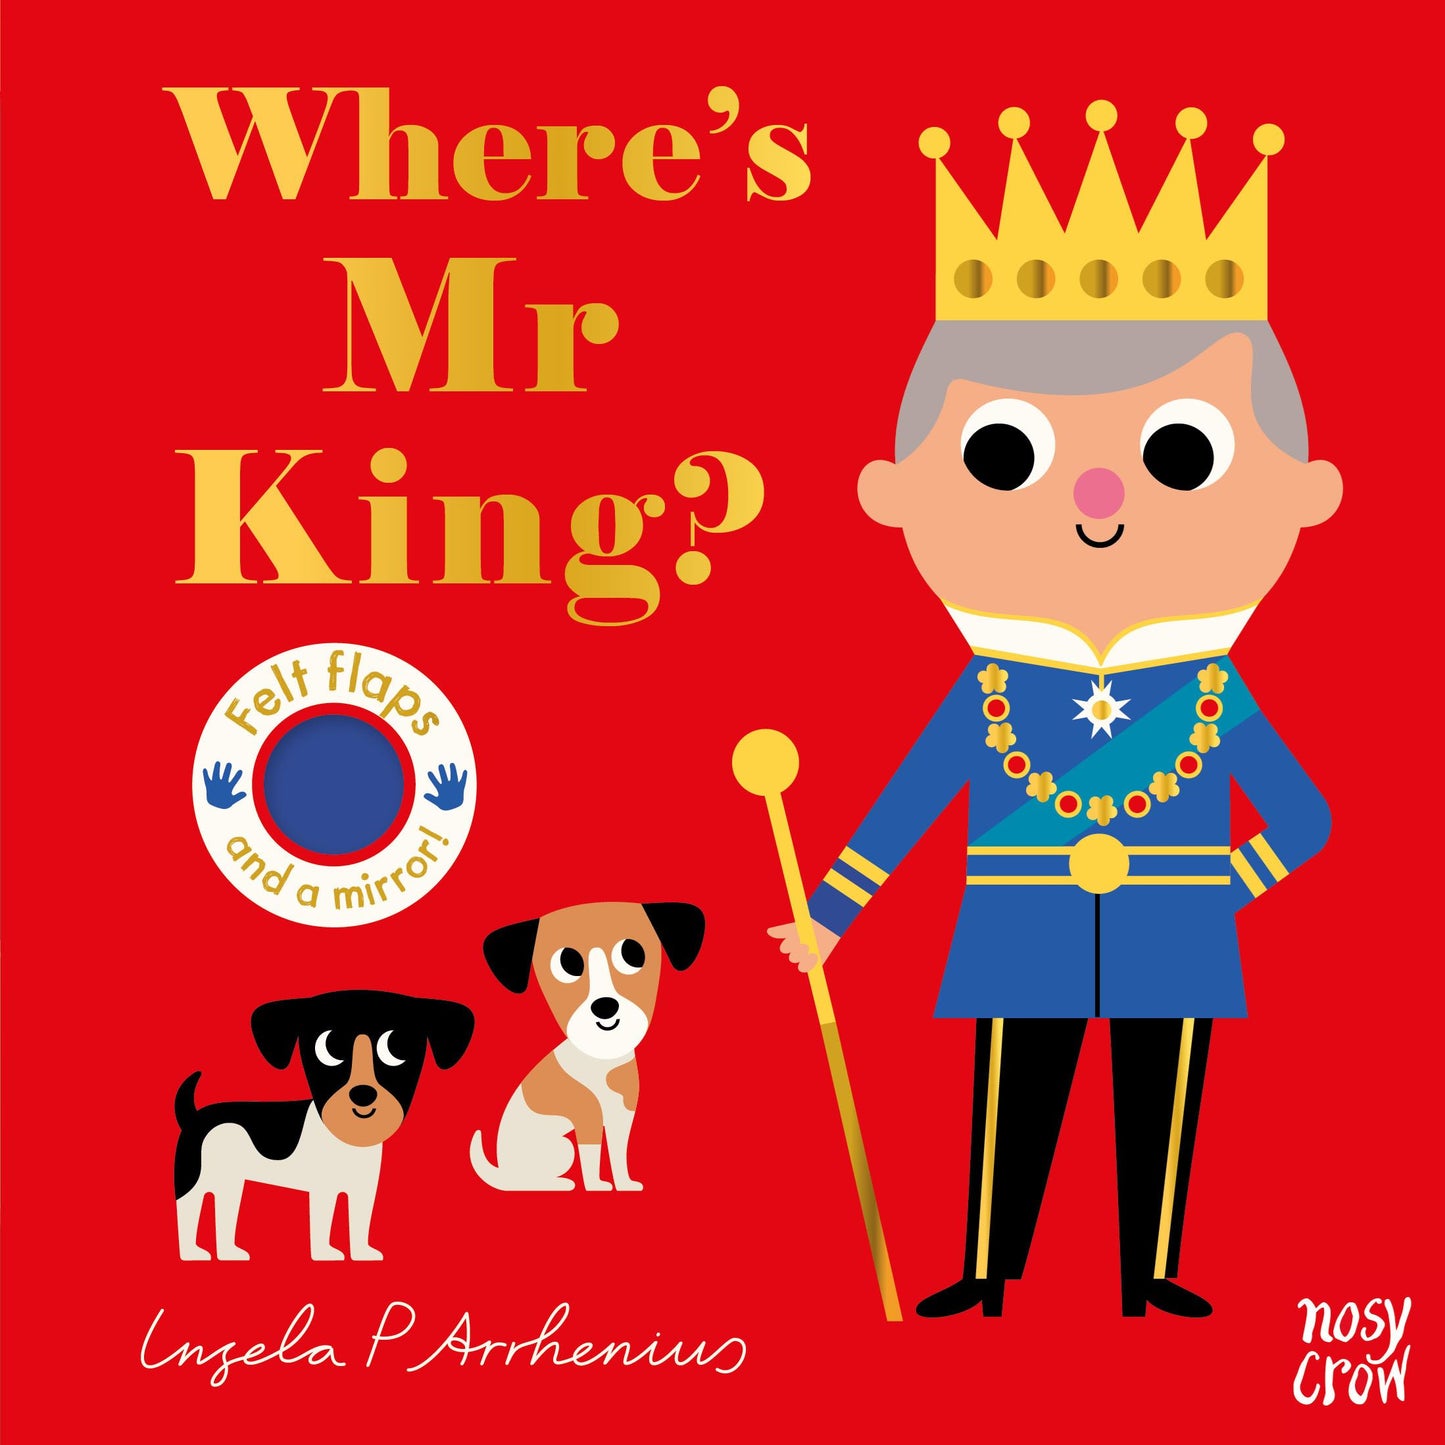 Where's Mr King